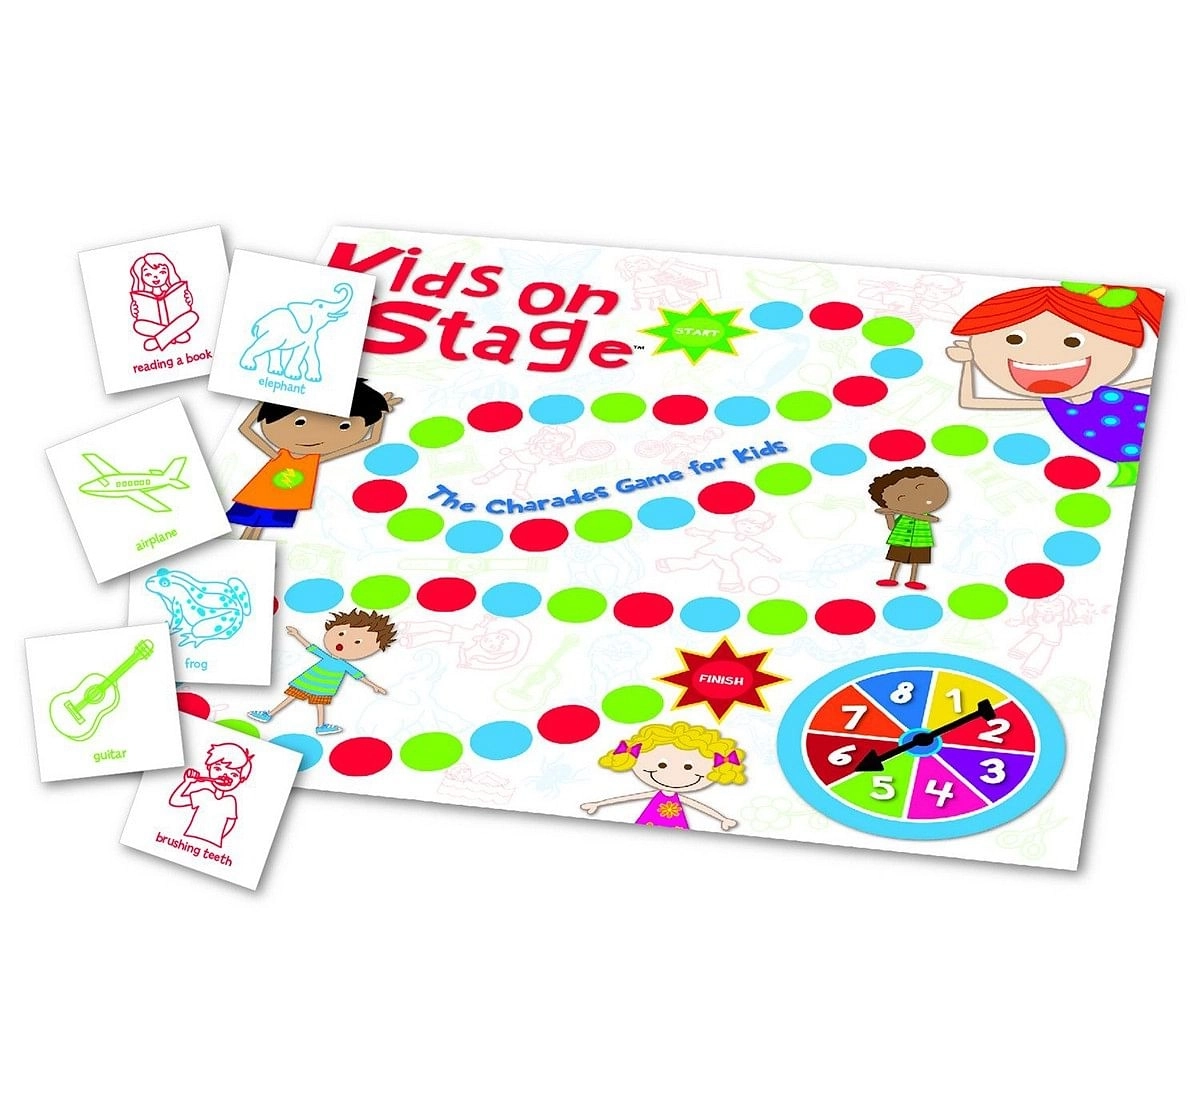 Funskool Games Kids On Stage,Multi Color Board Games for Kids age 3Y+ 